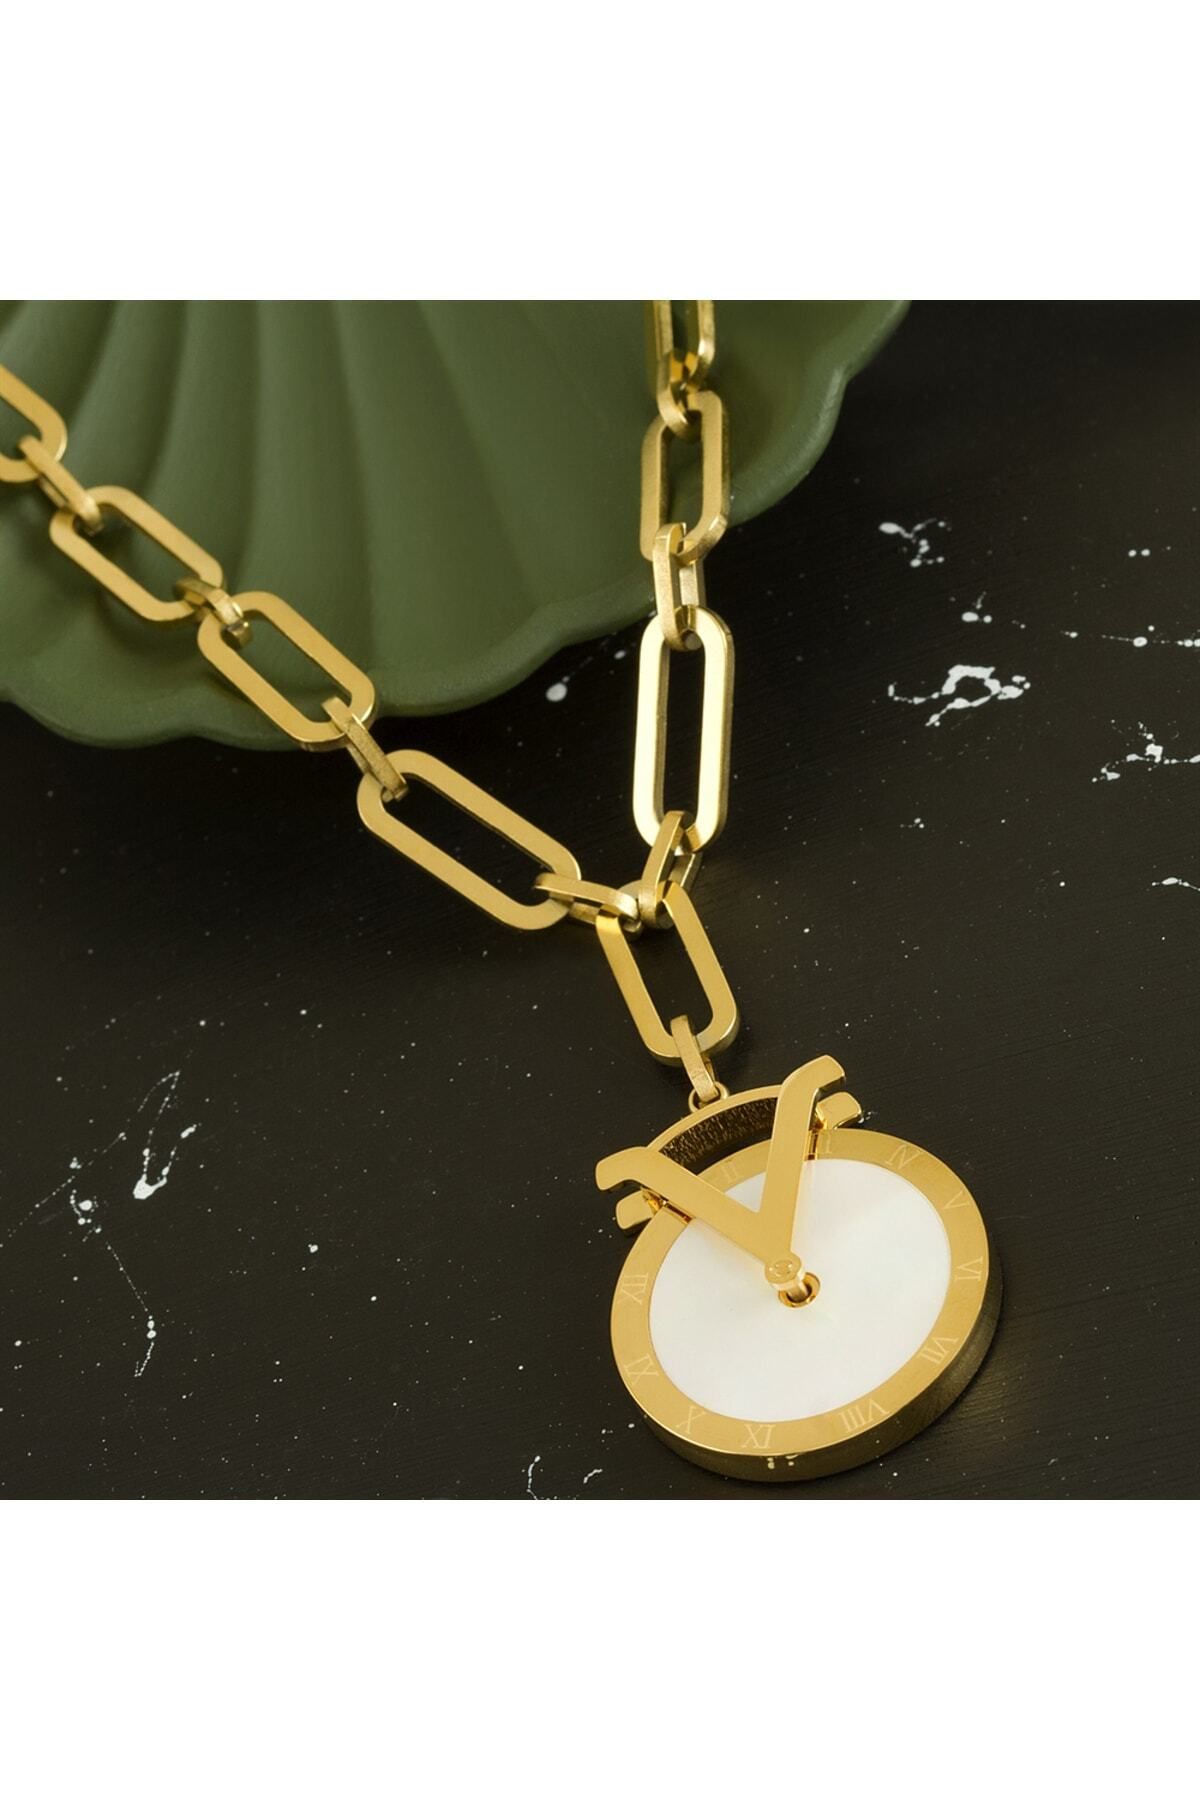 FASHİON JEWELRY Unisex Gold Madalyon Marka Tasarım Çelik Sembol Kolye